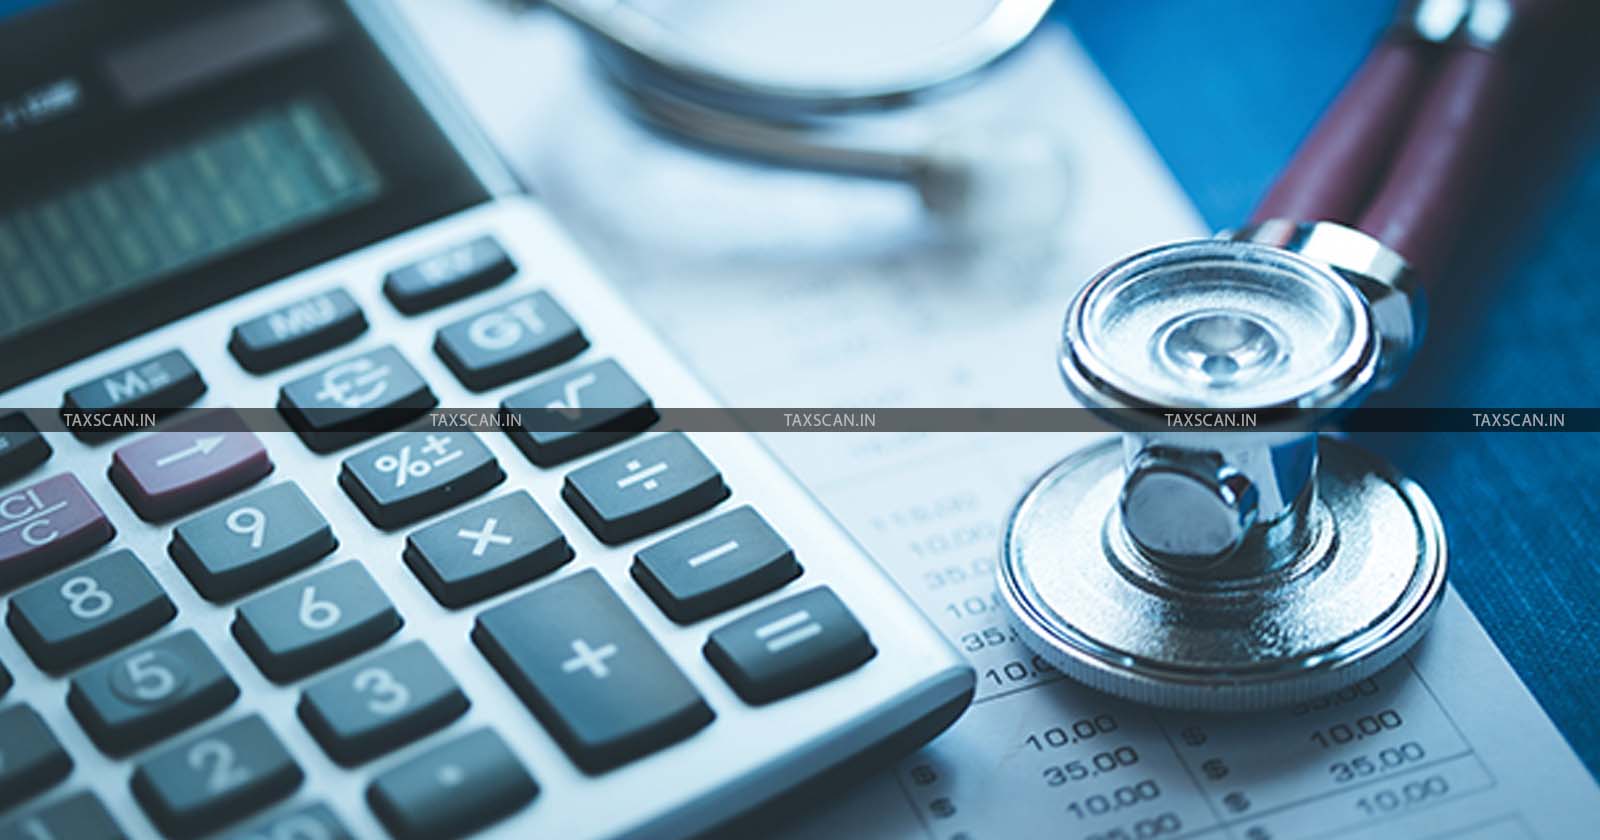 Bombay HC - Healthcare Budget - Sanctioned Budget - Maharashtra Public Service Commission - TAXSCAN